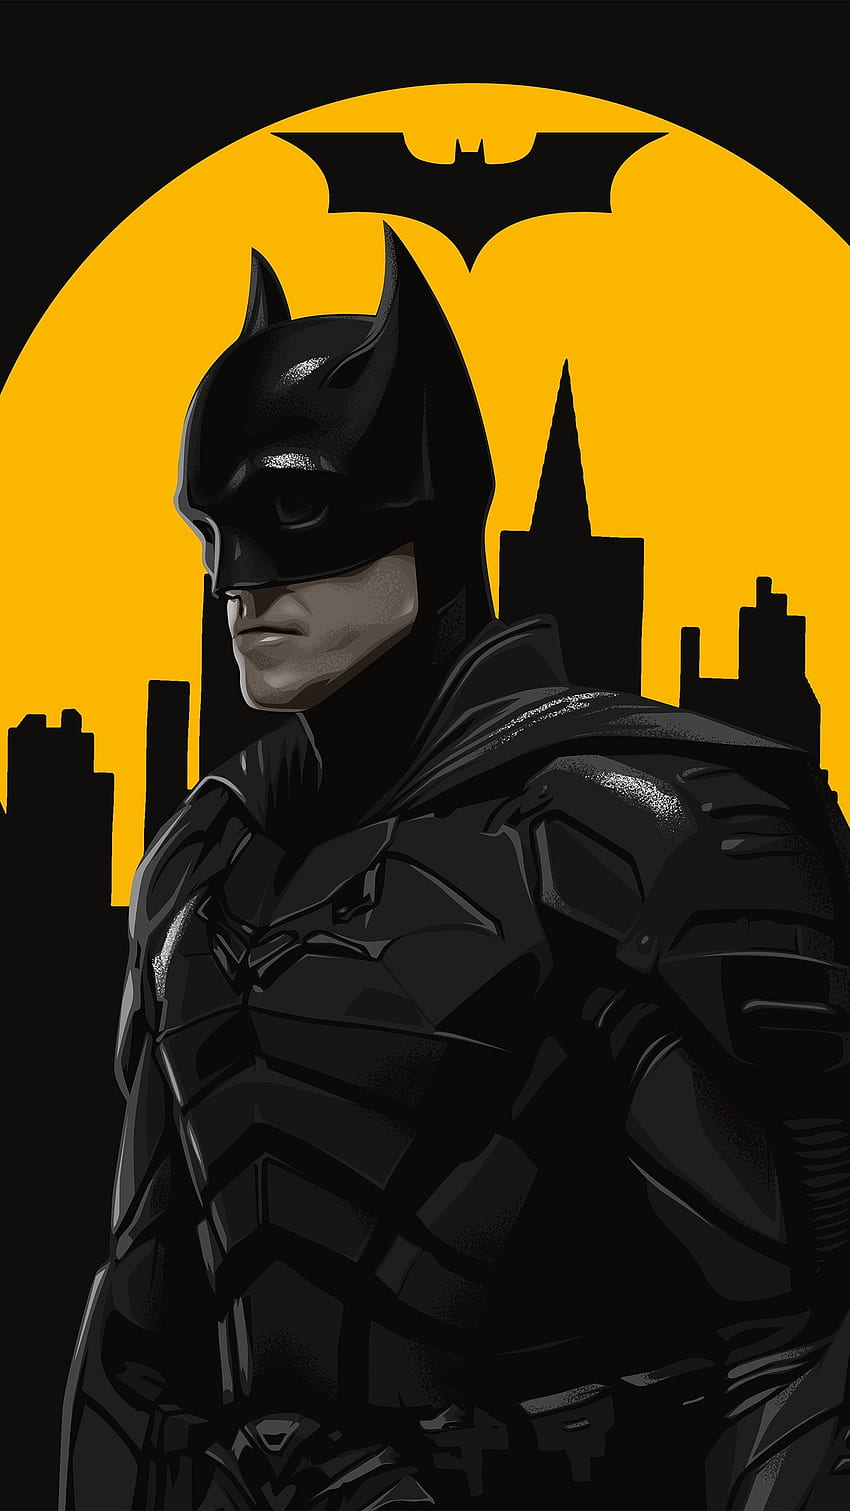 Batman Logo Evolution Poster